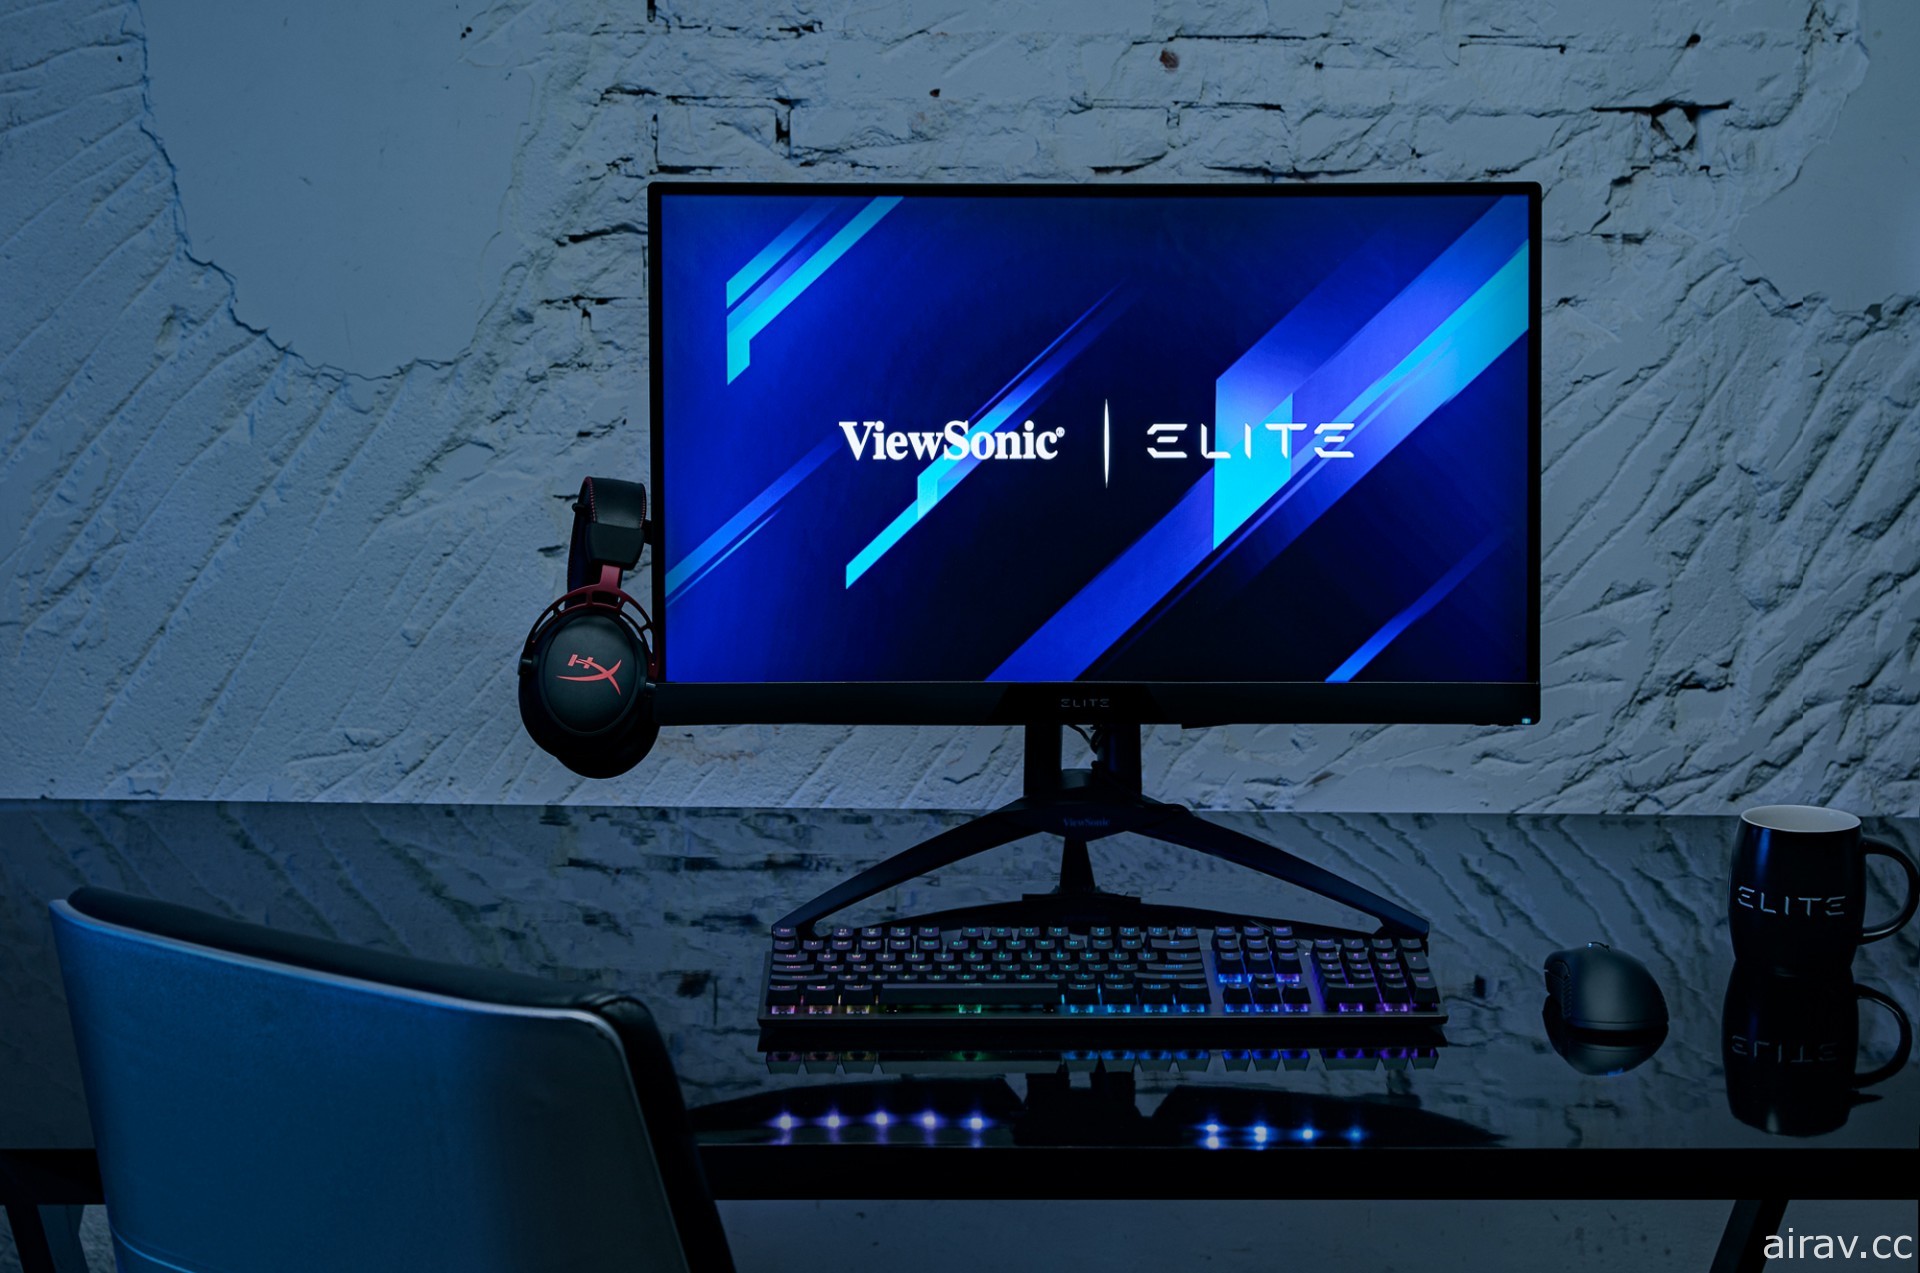 ViewSonic 推出全新 27 吋 Elite XG270QC 电竞显示器 拥有 2560x1440 超高分辨率